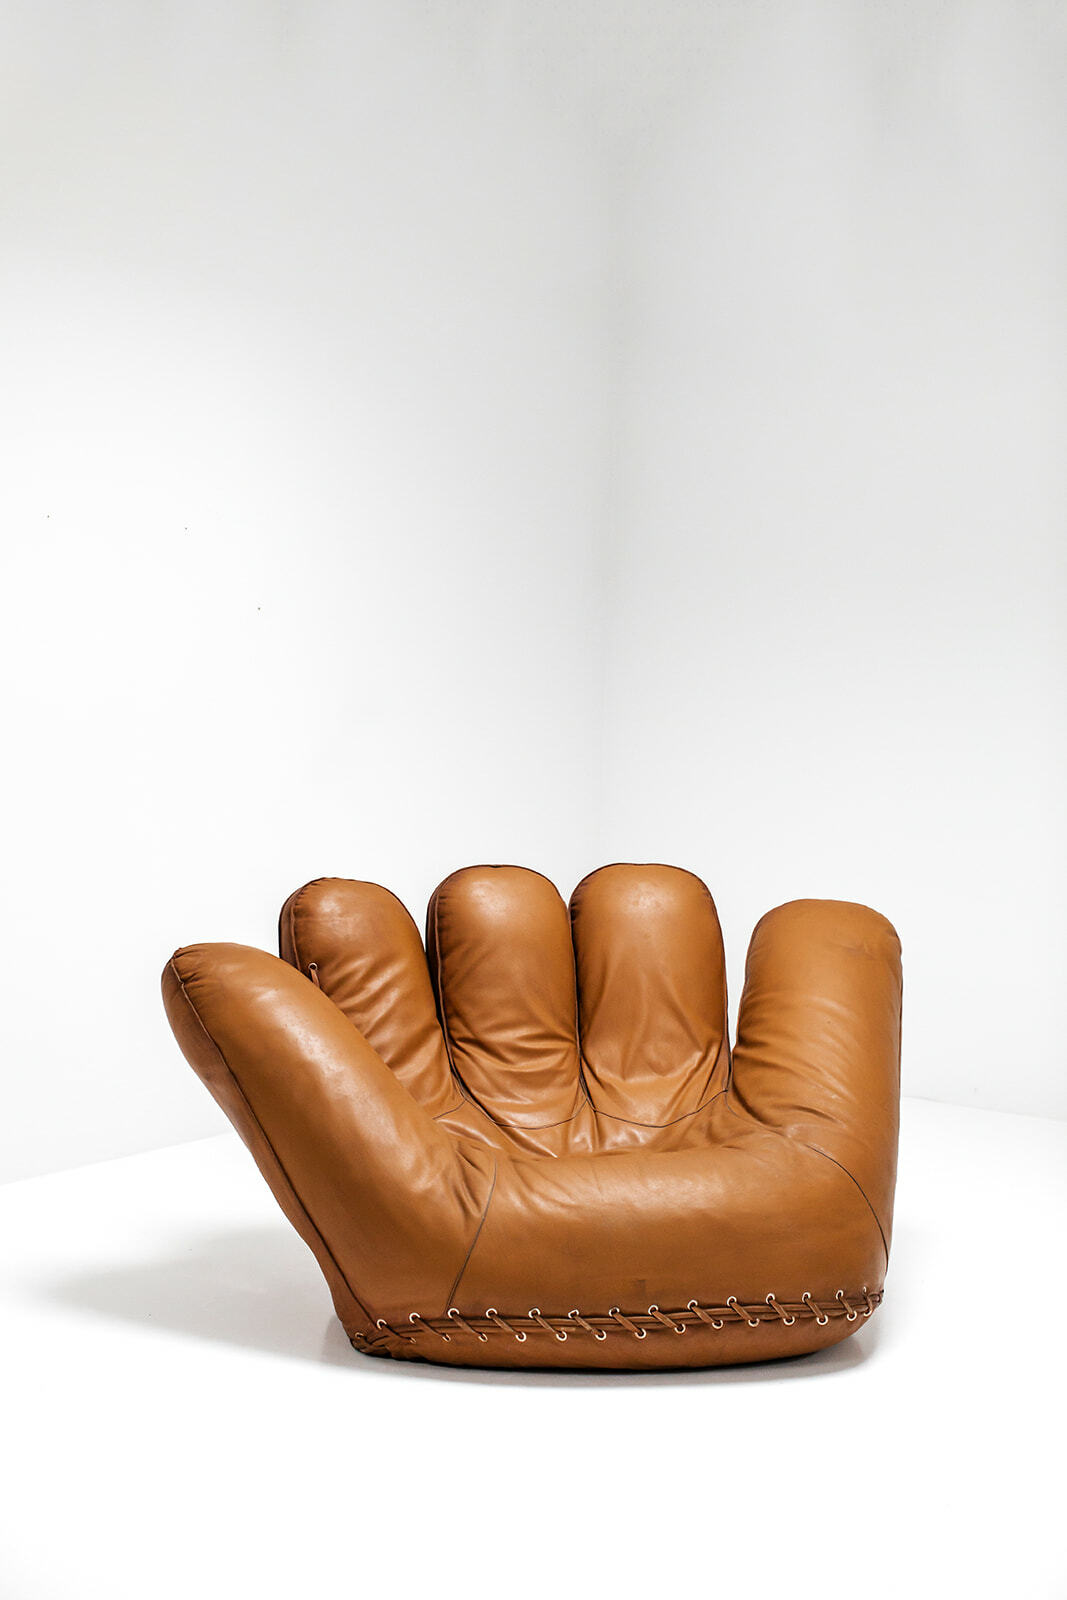 JOE baseball glove chair by Poltronova